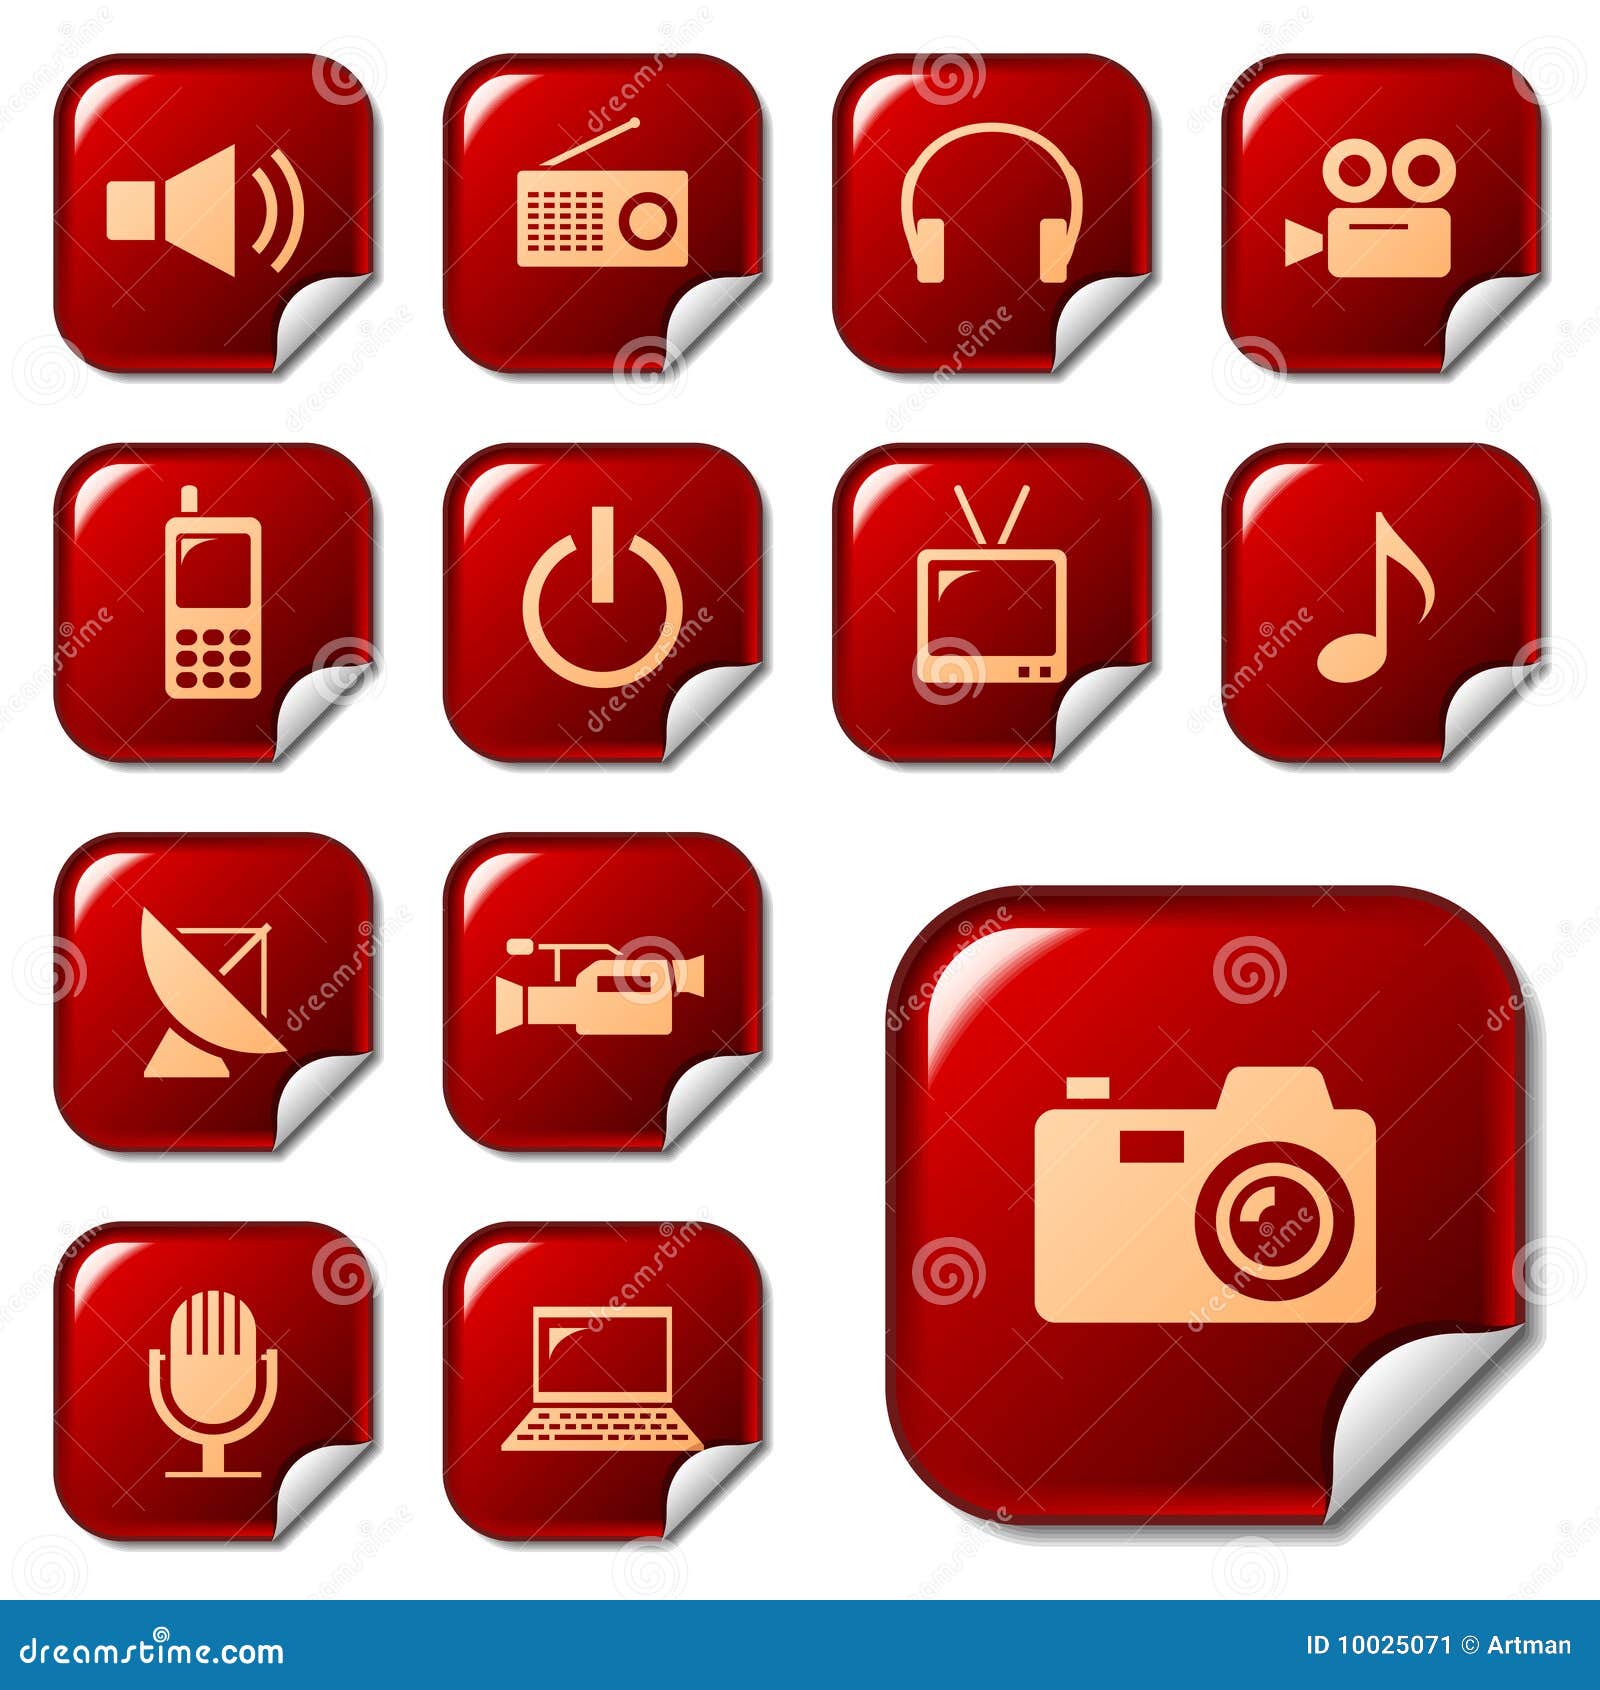 media & telecom web icons